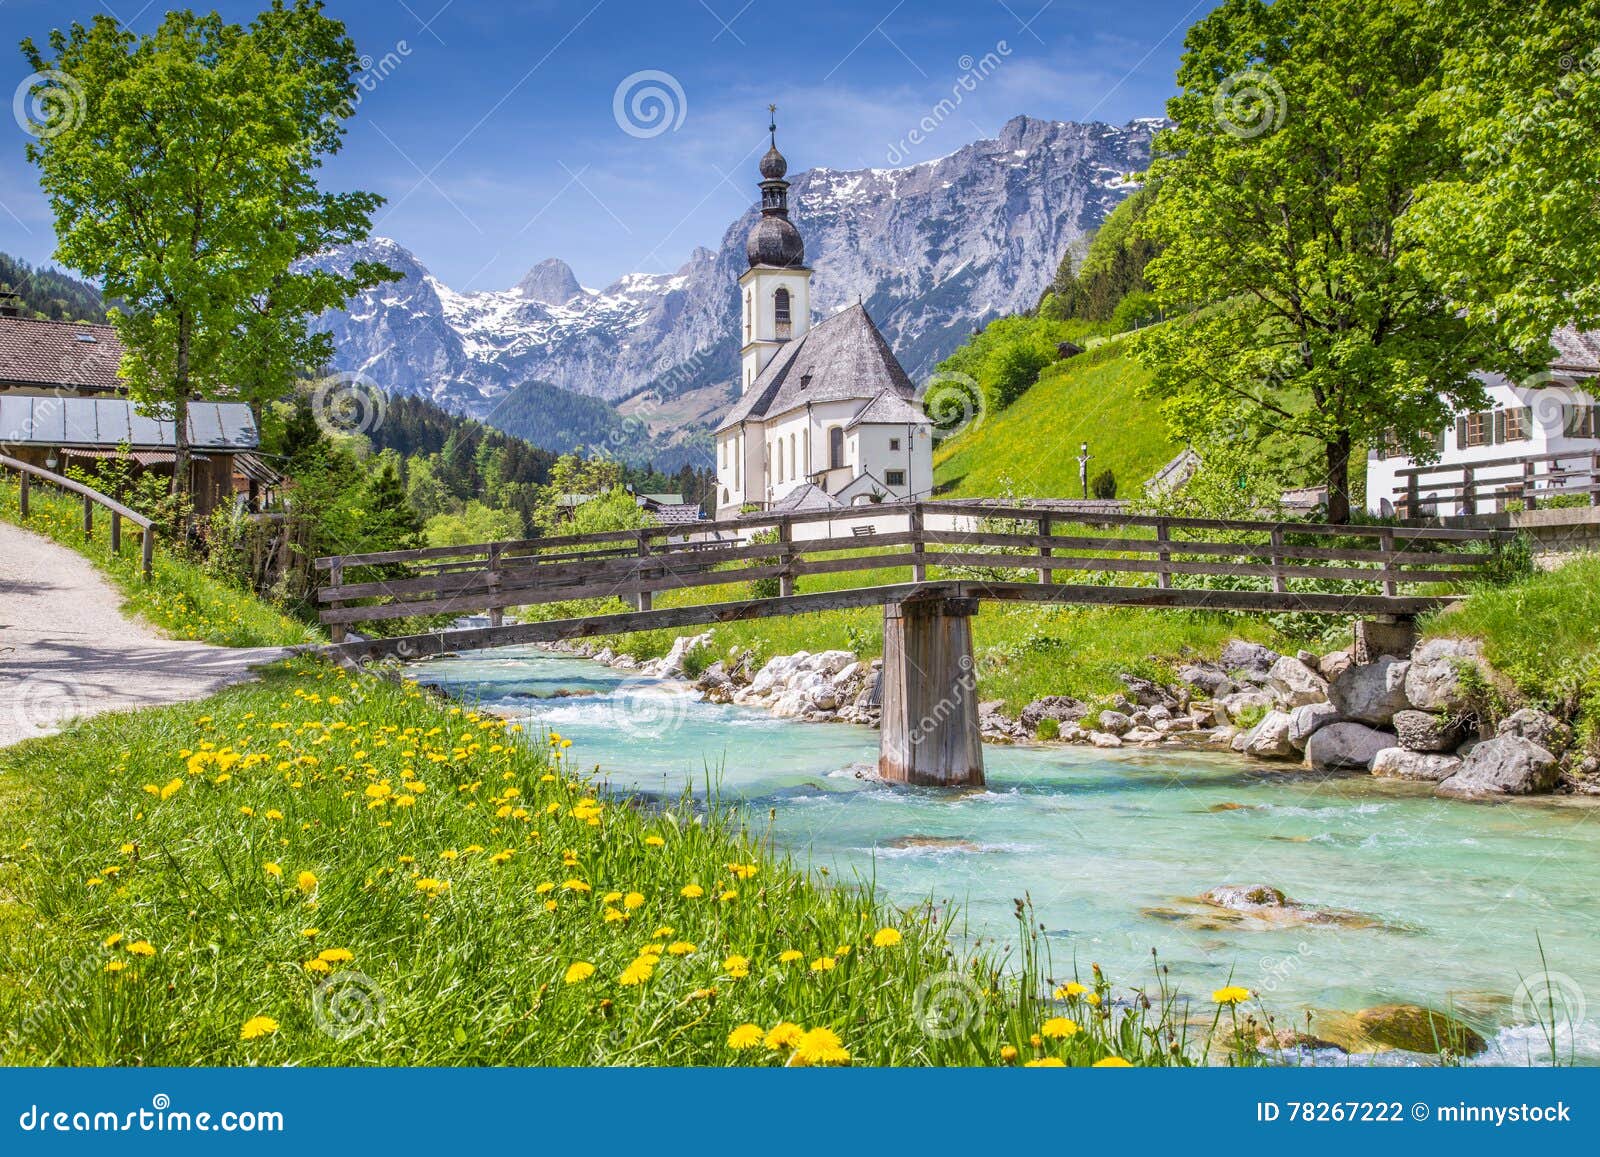 church of ramsau, nationalpark berchtesgadener land, bavaria, germany